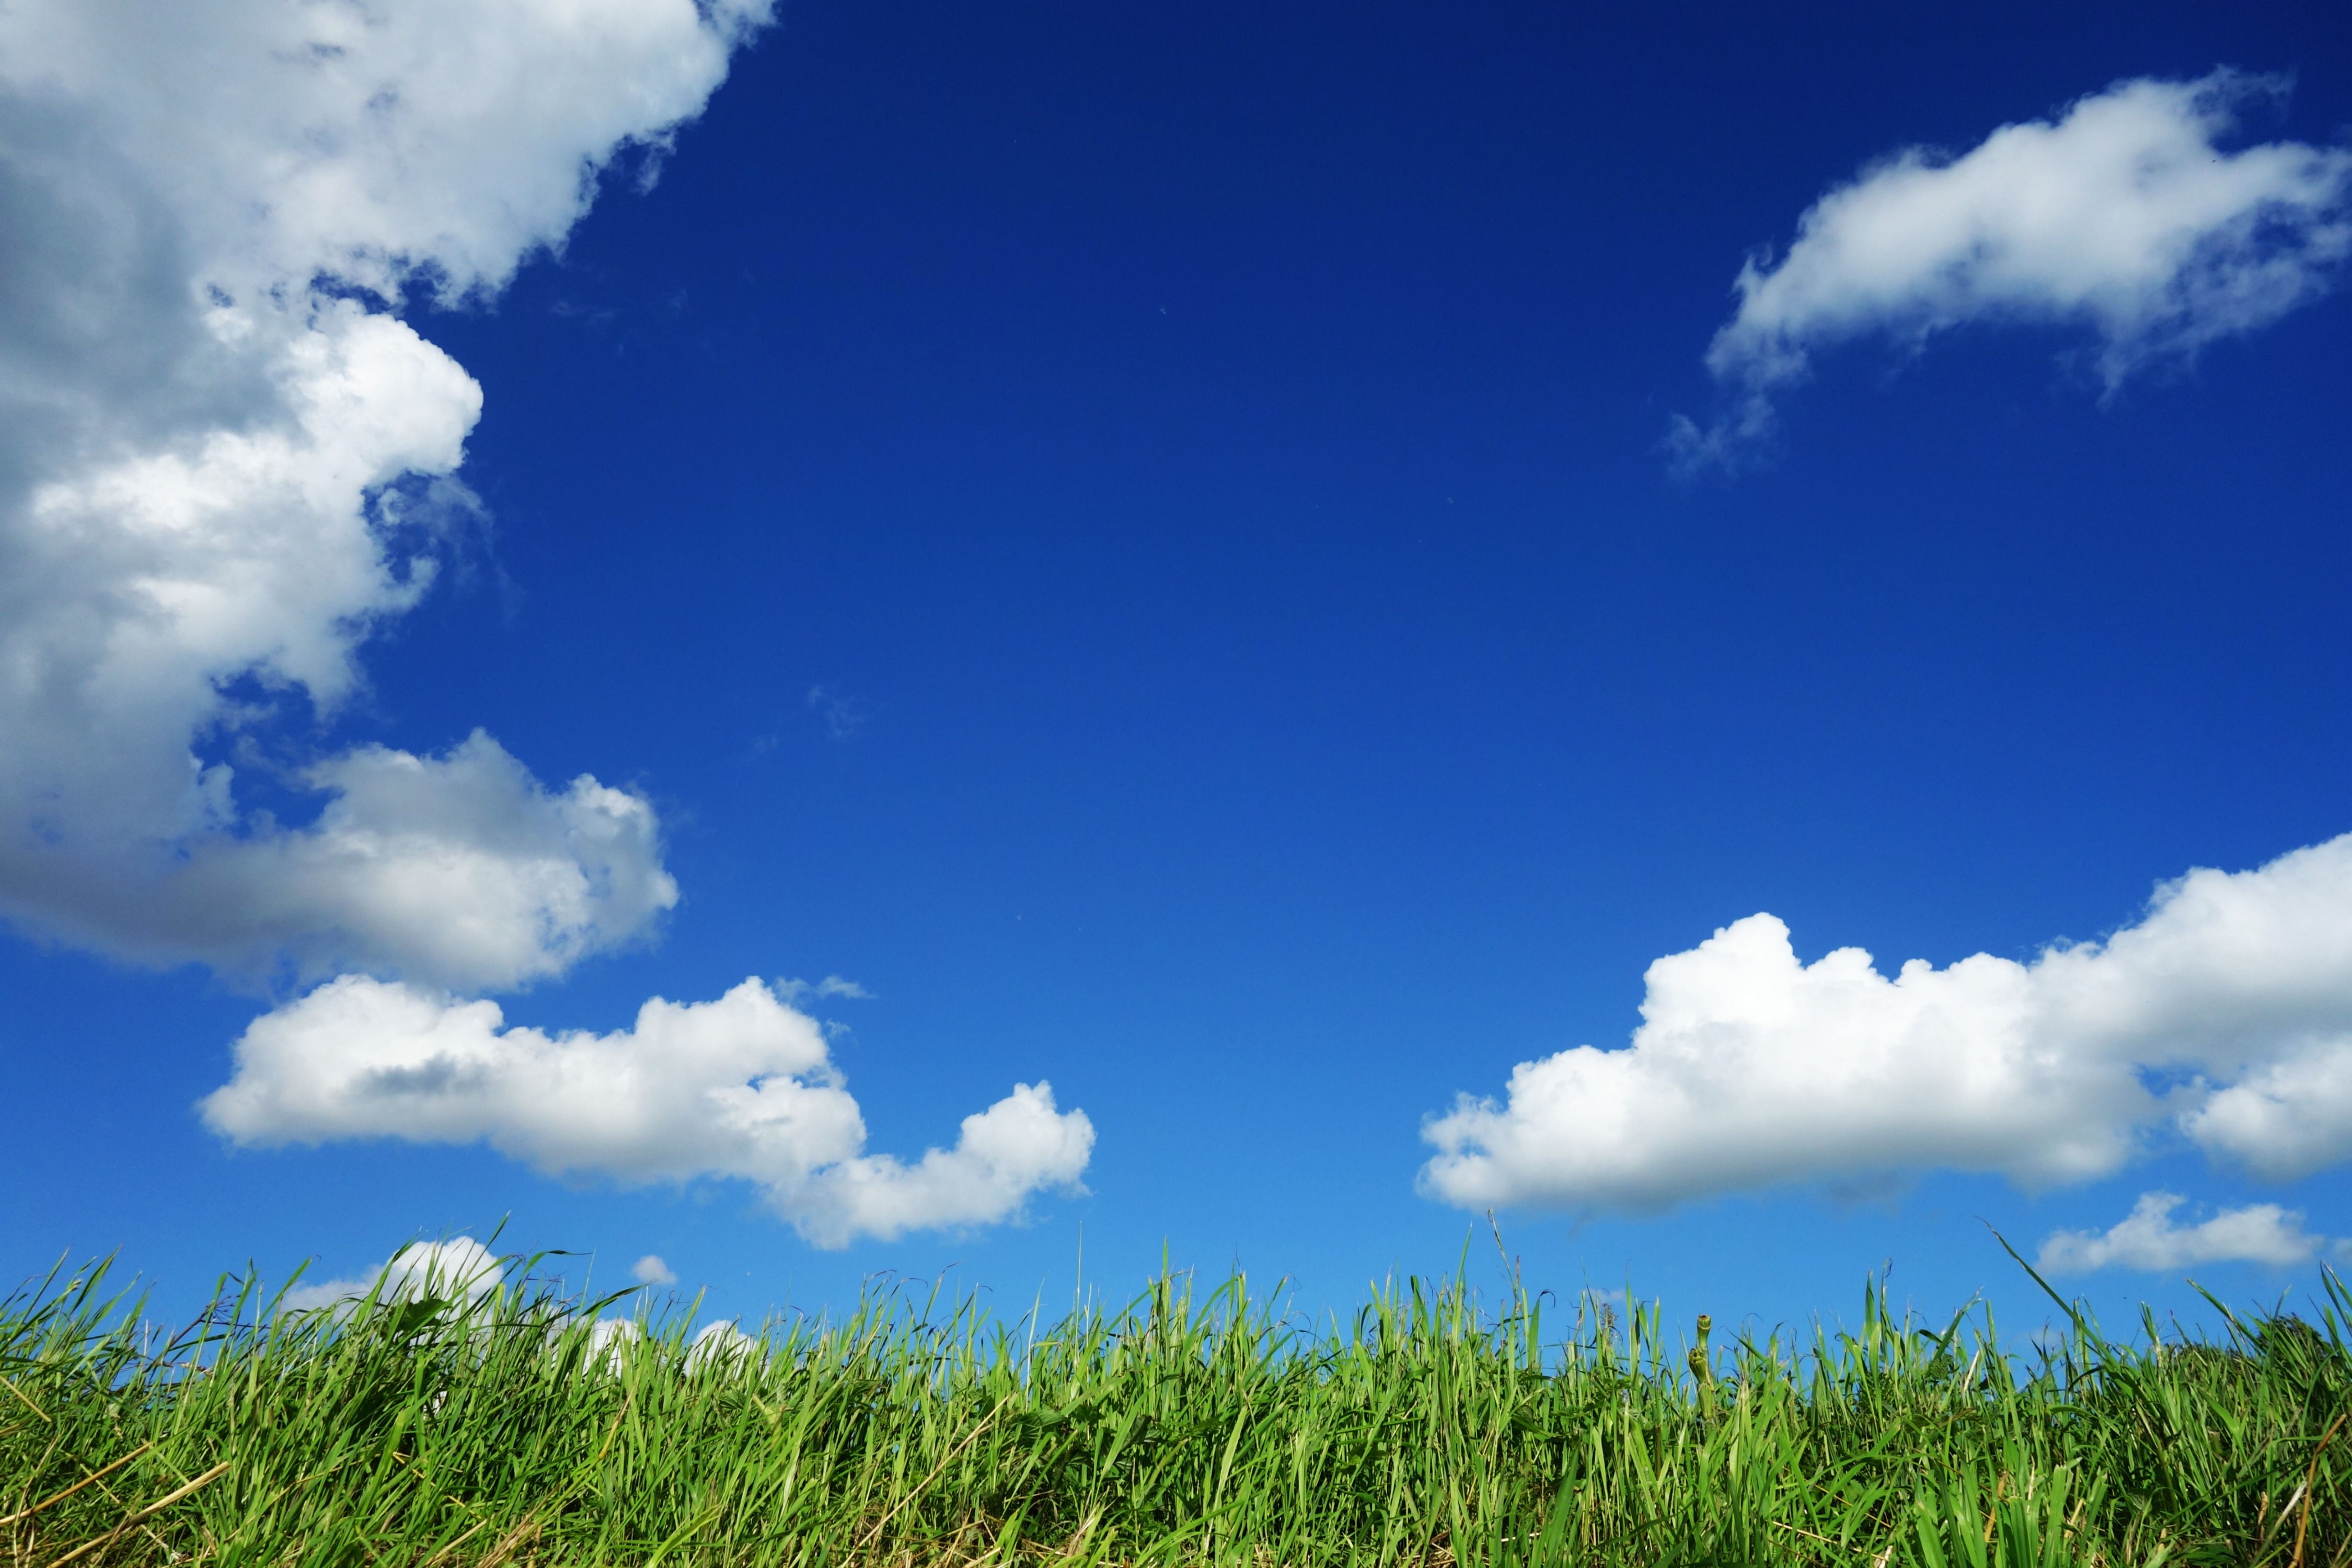 Grass Field Under Cloudy Sky · Free